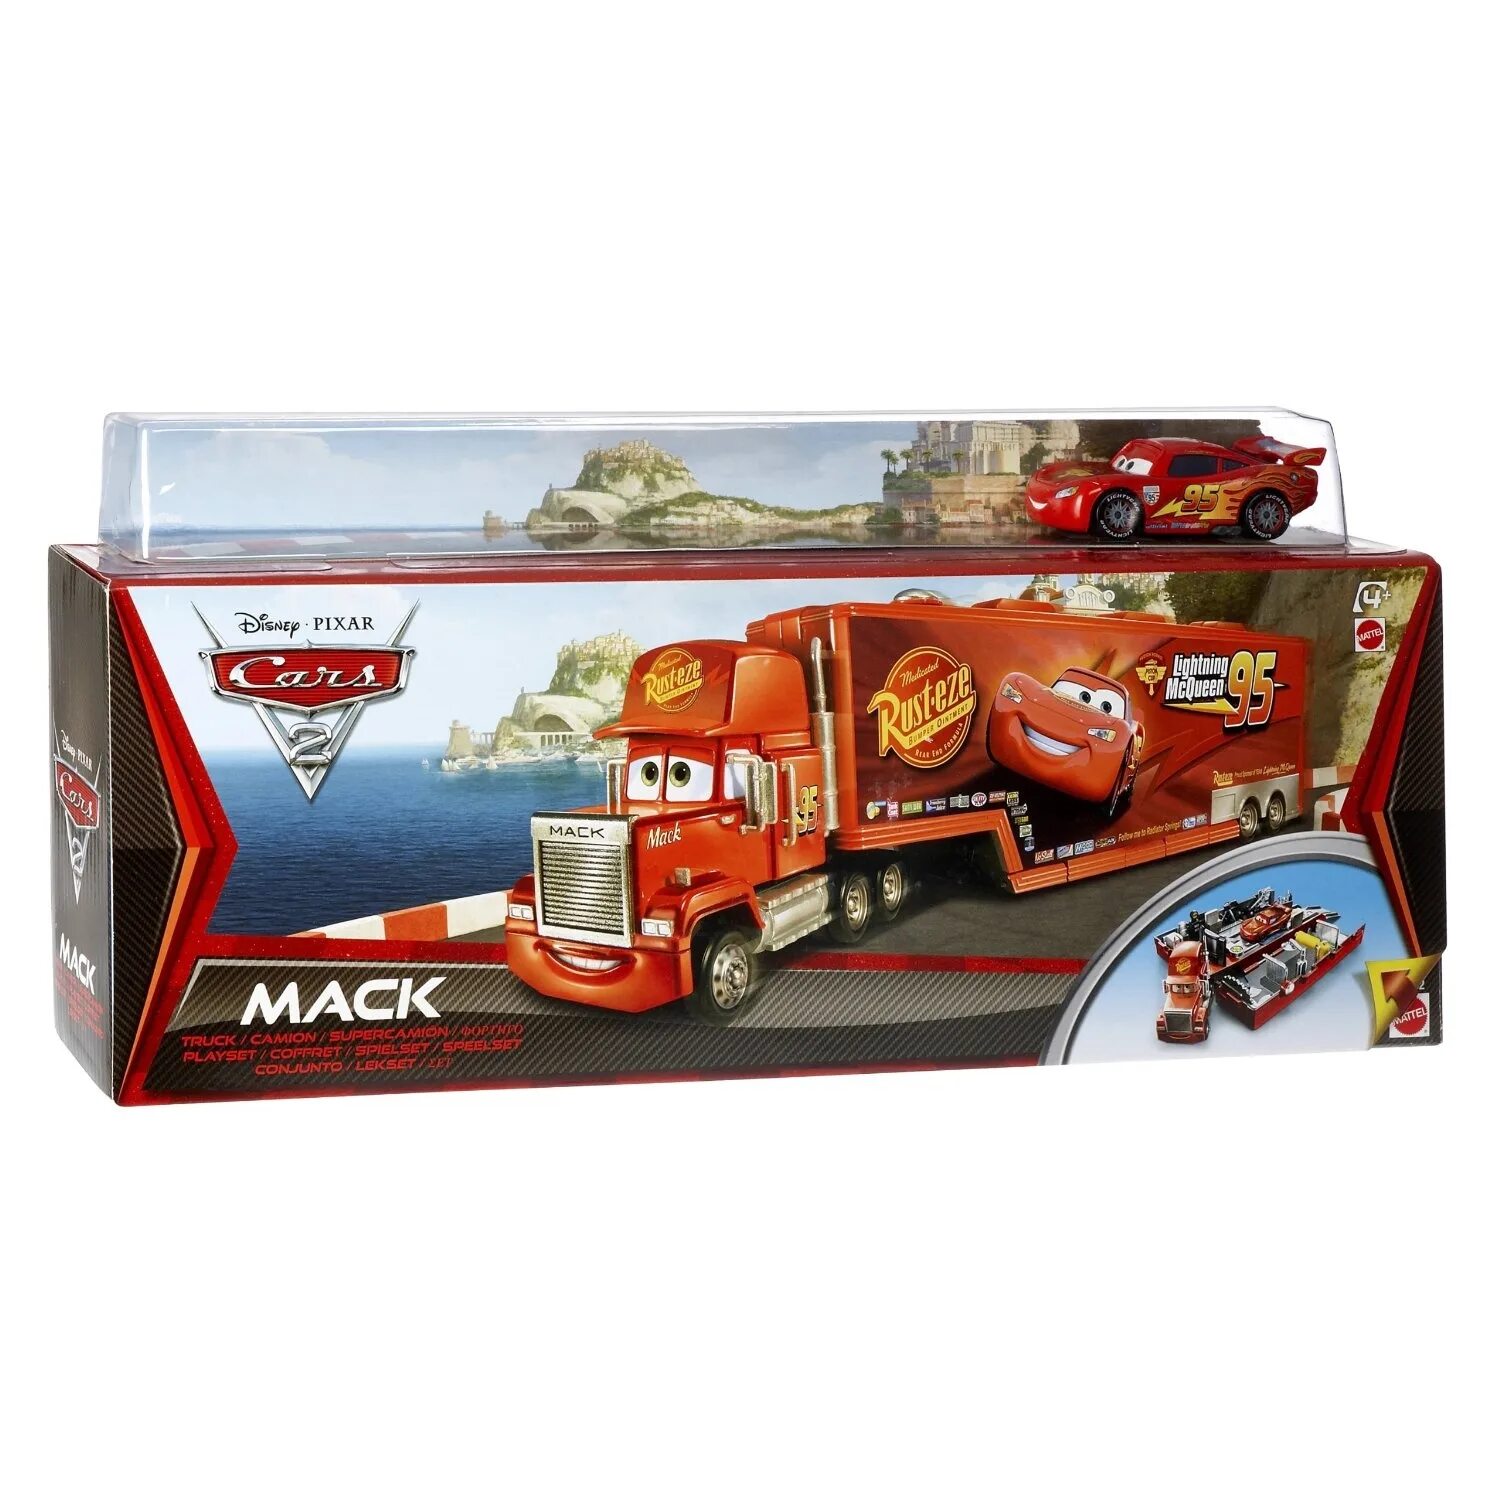 Truck toy cars. Грузовик Mattel cars 2 Deluxe Mack (y0539/y0554) 1:50. Автовоз Mattel cars 2 Mack (y1110) 1:55 34 см. Автовоз Mattel cars 2 Mack. Легковой автомобиль Mattel cars 2 Deluxe Lightning MCQUEEN Dinico (y0539/y0555) 1:50.